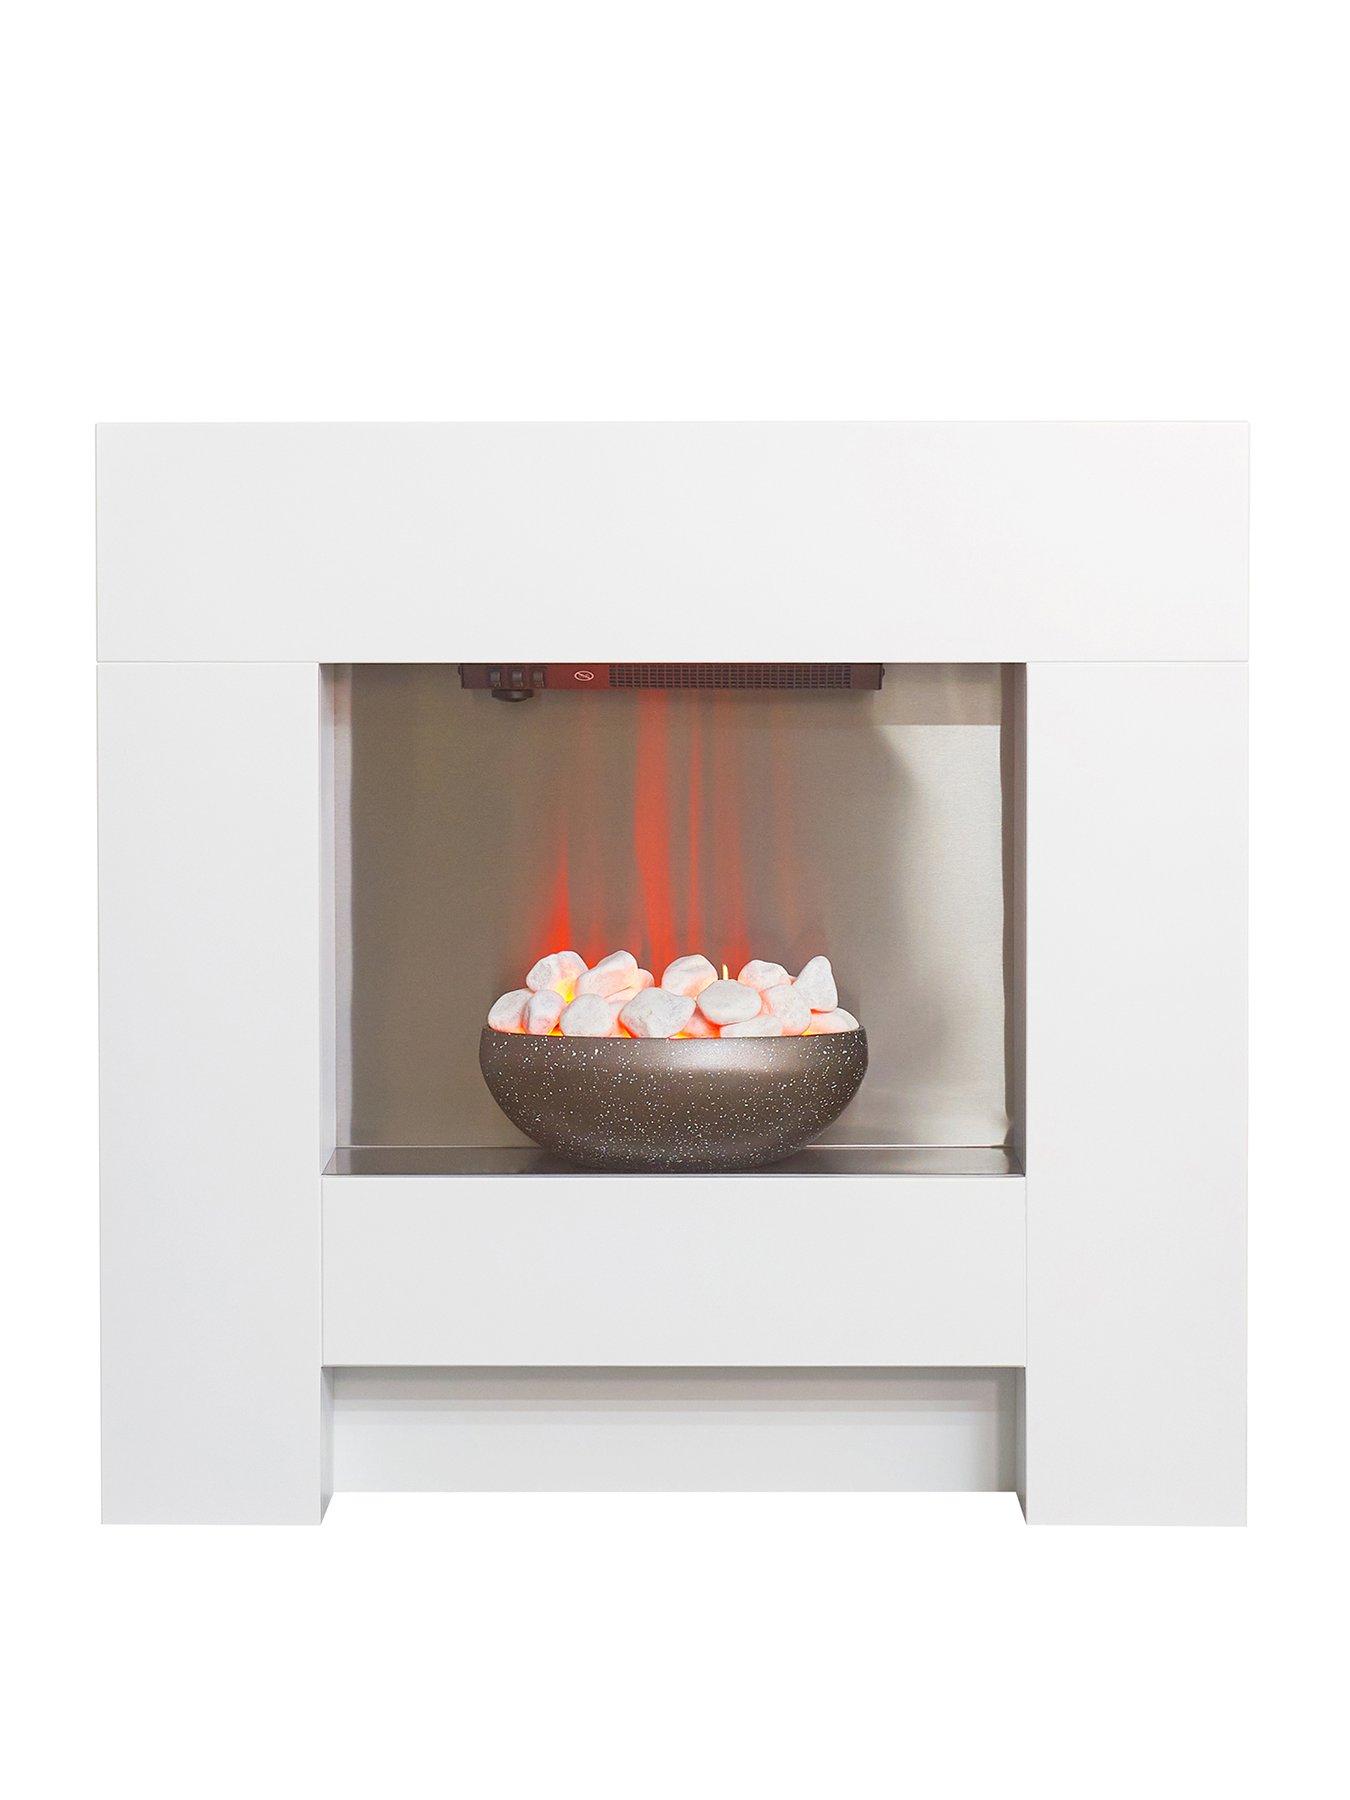 Adam Fires & Fireplaces Cubist Electric Fireplace Suite